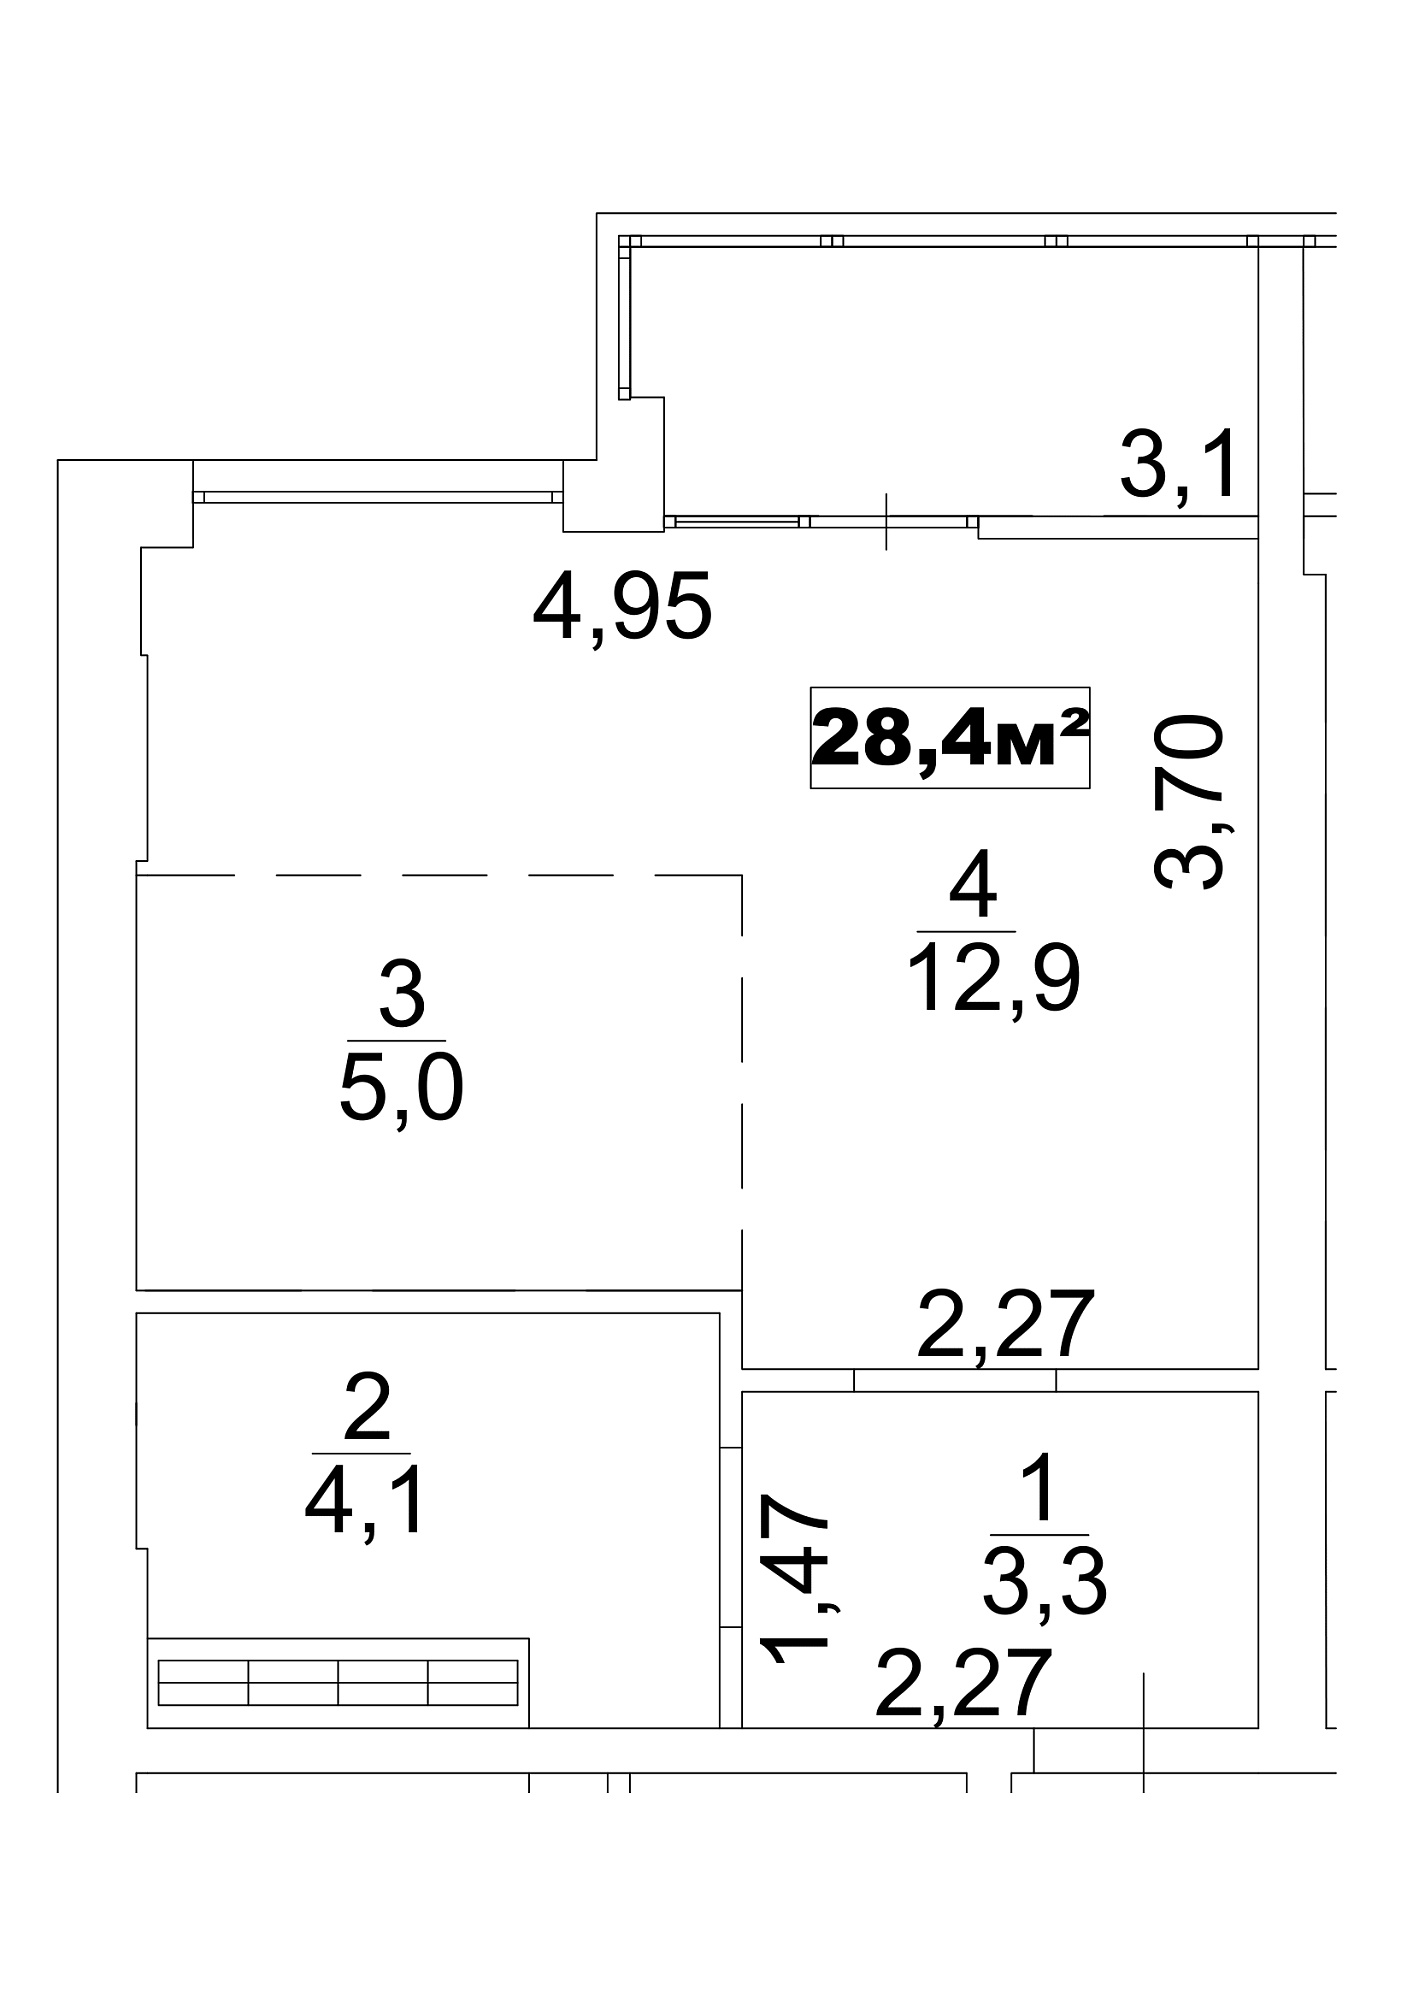 Планировка Smart-квартира площей 28.4м2, AB-13-10/0081б.